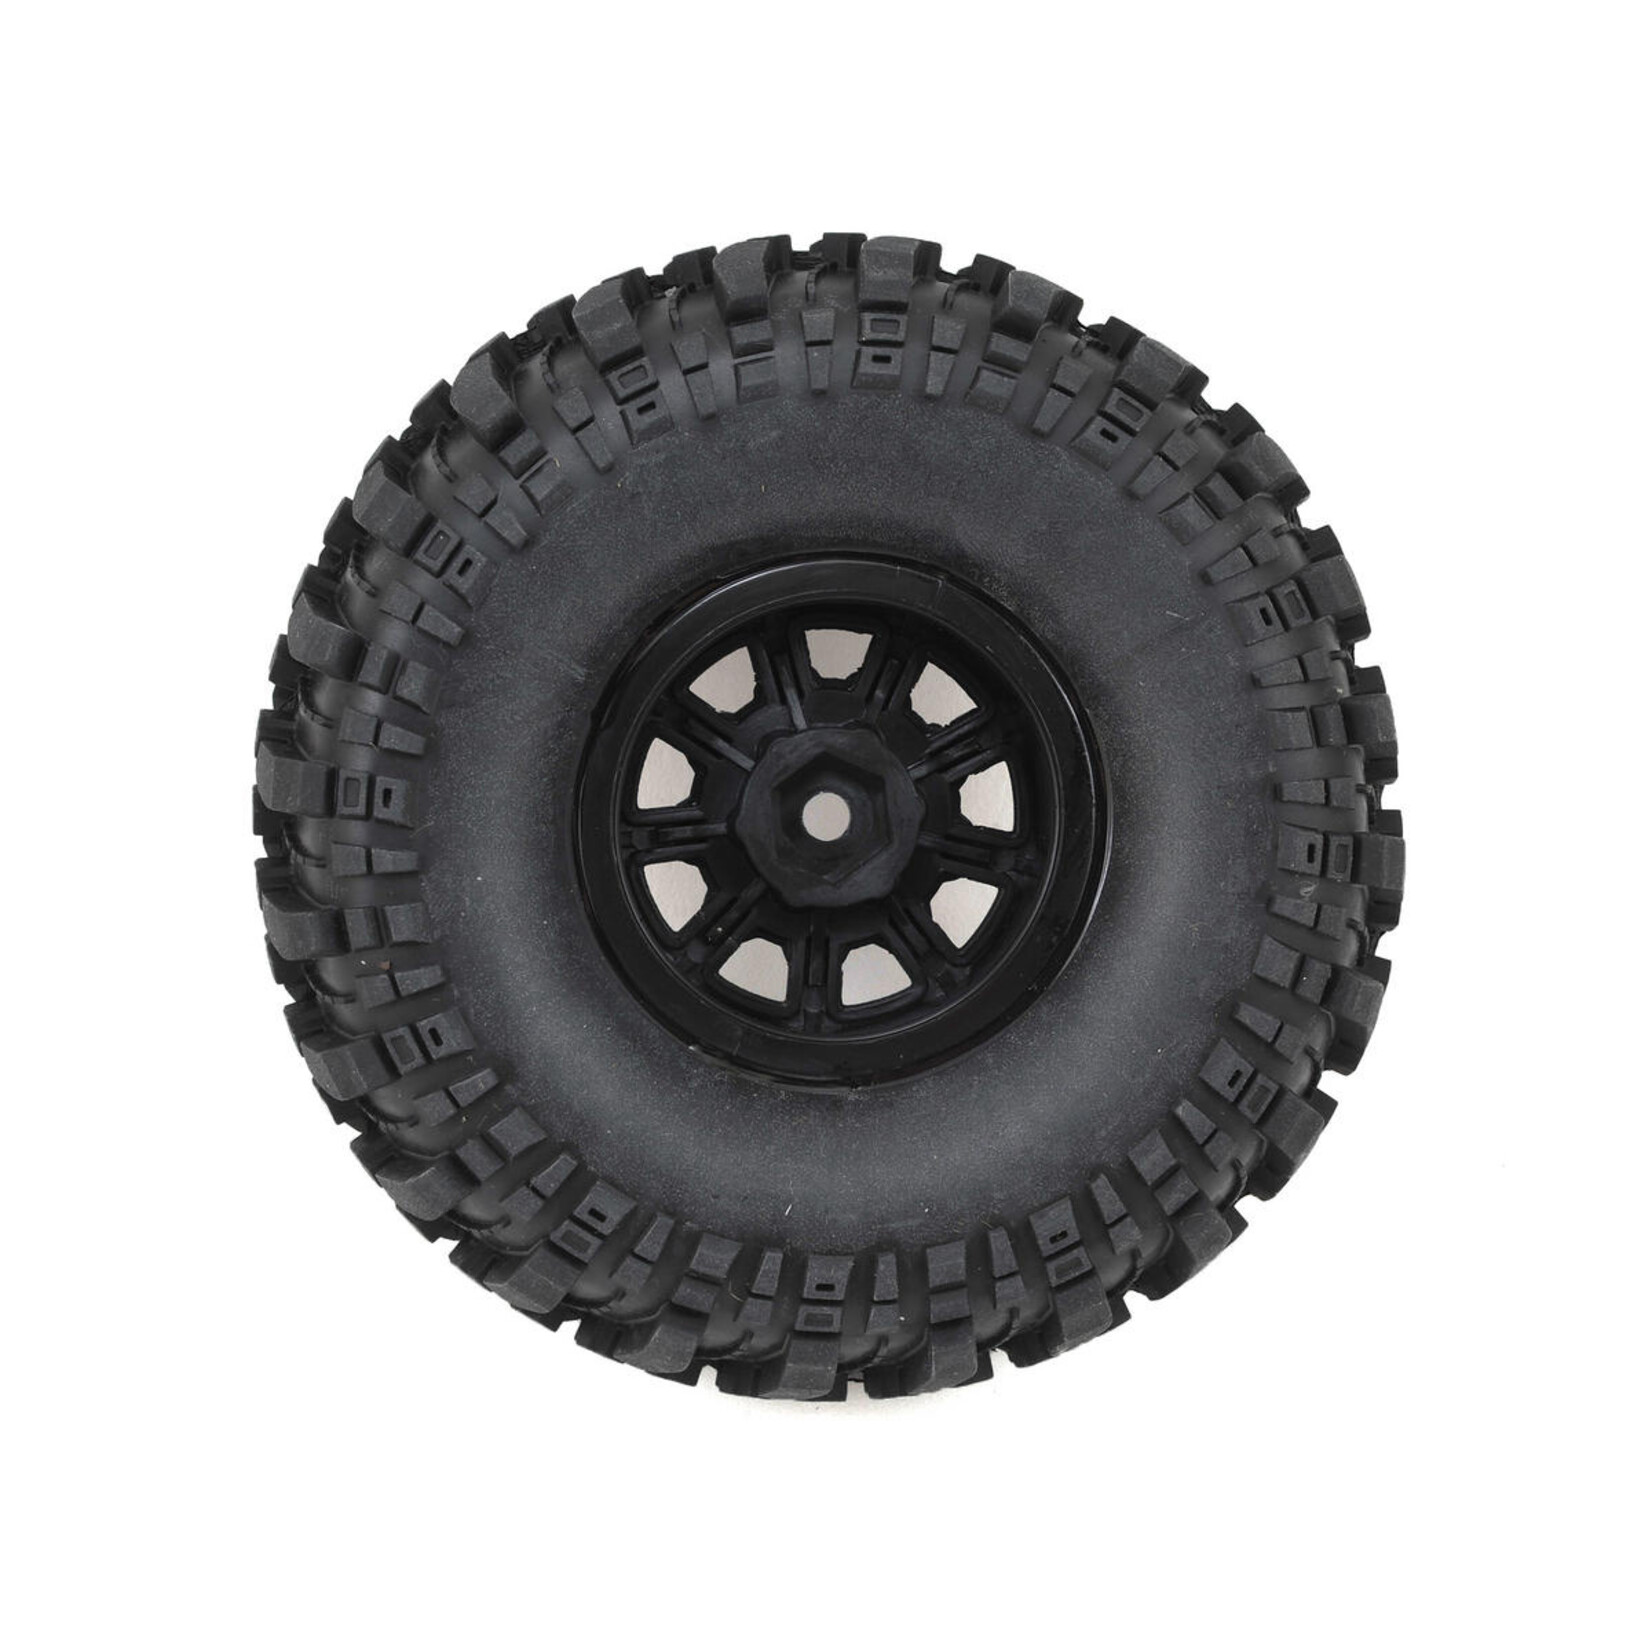 Duratrax DuraTrax Deep Woods CR 1.9" Pre-Mounted Crawler Tires (2) (Black Chrome) #DTXC4027